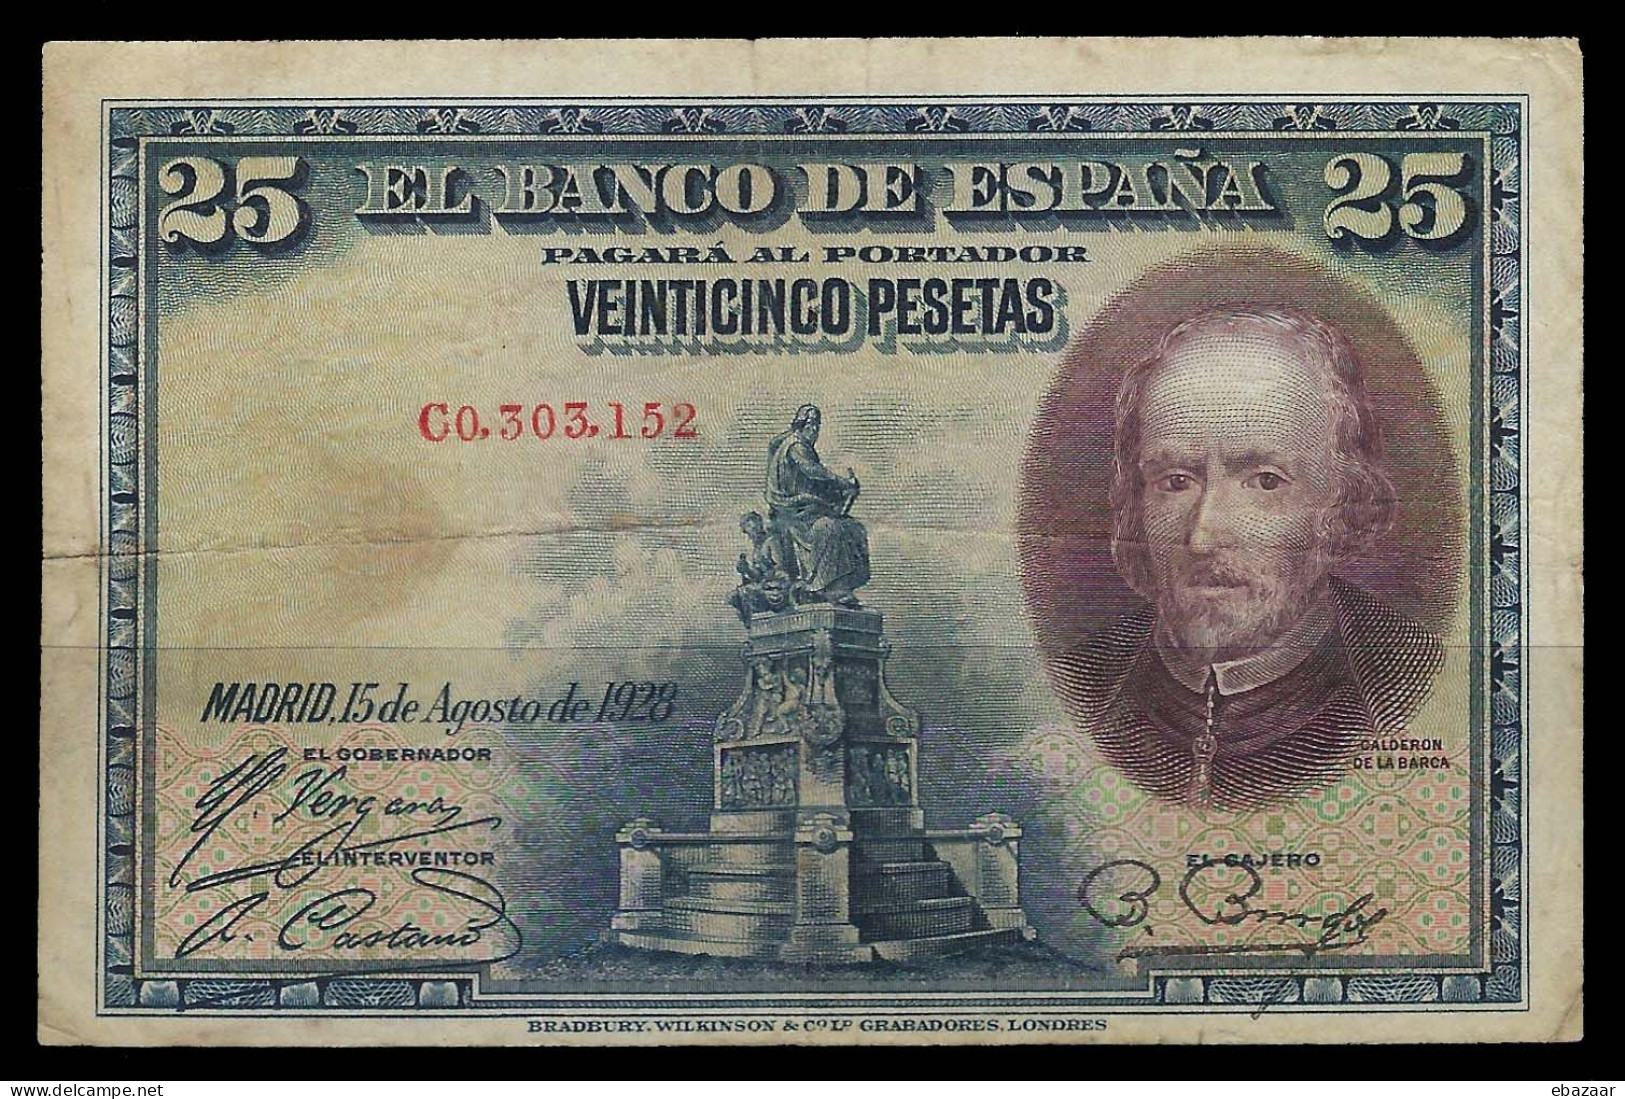 Spain Banknote 15.08.1928 Banco De España 25 Pesetas P- 74b Bradbury Wilkinson, London Circulated + FREE GIFT - 1-2-5-25 Pesetas